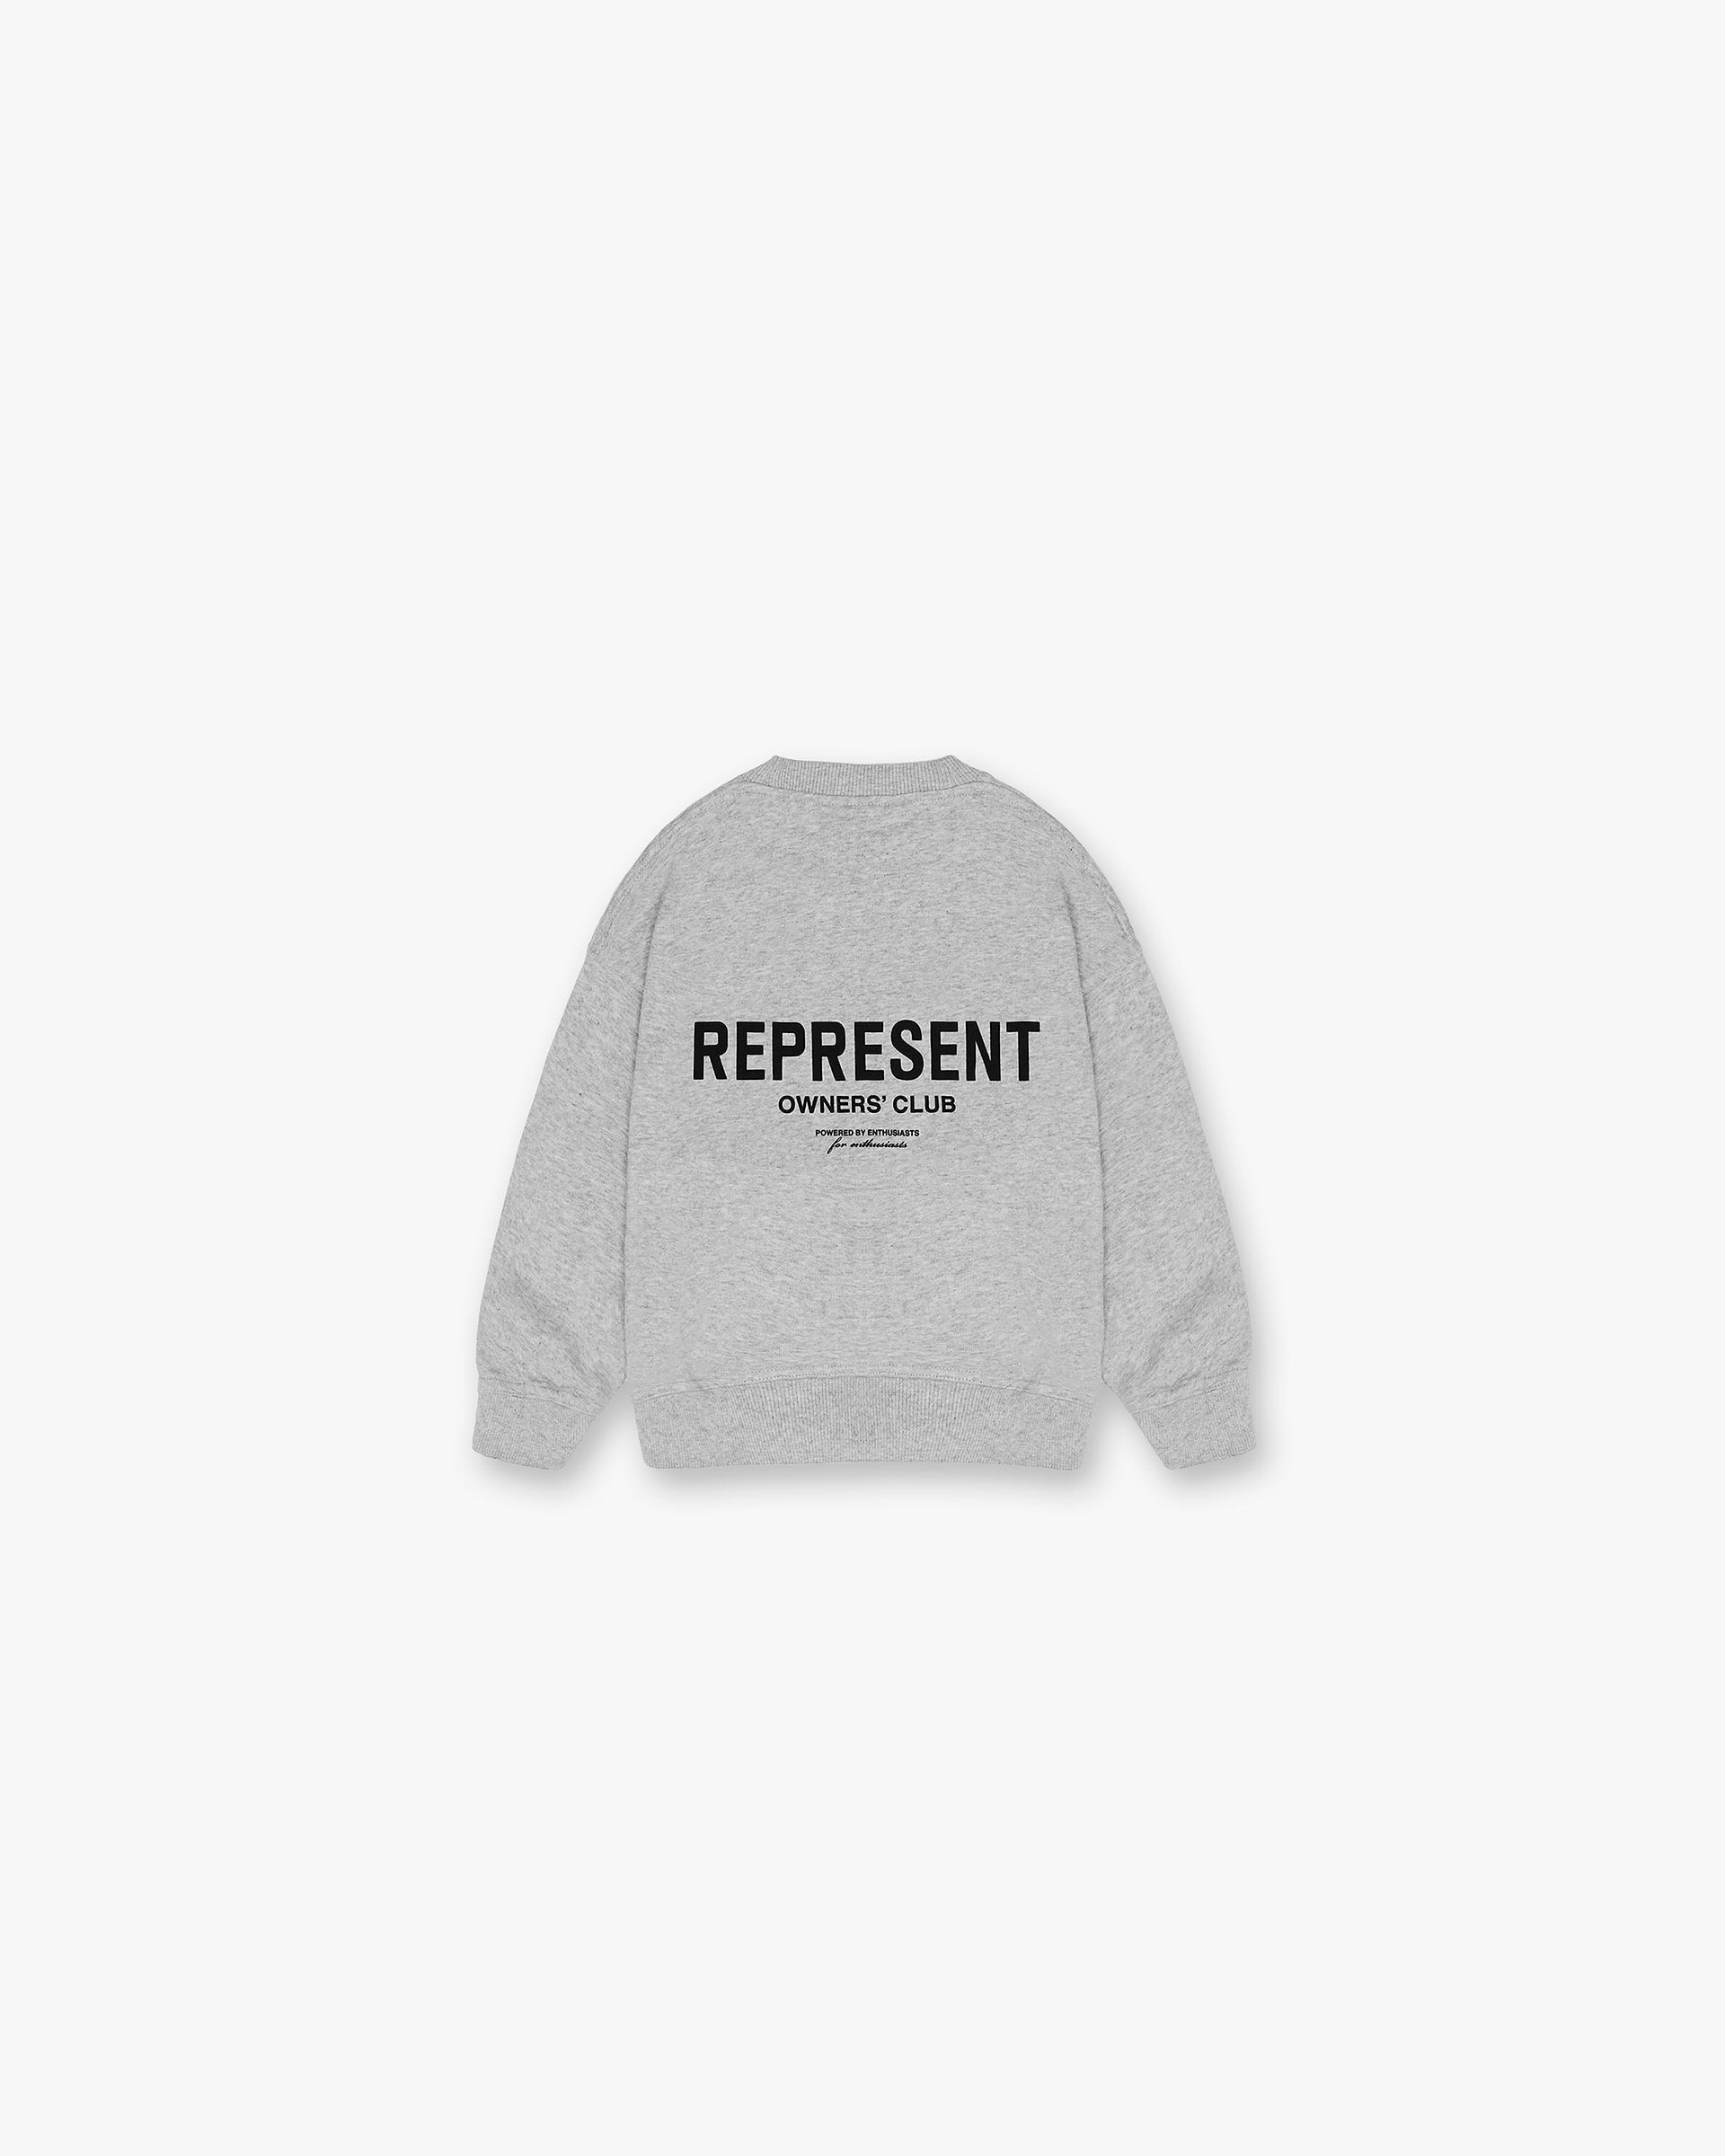 Represent Mini Owners Club Sweater - Ash Grey